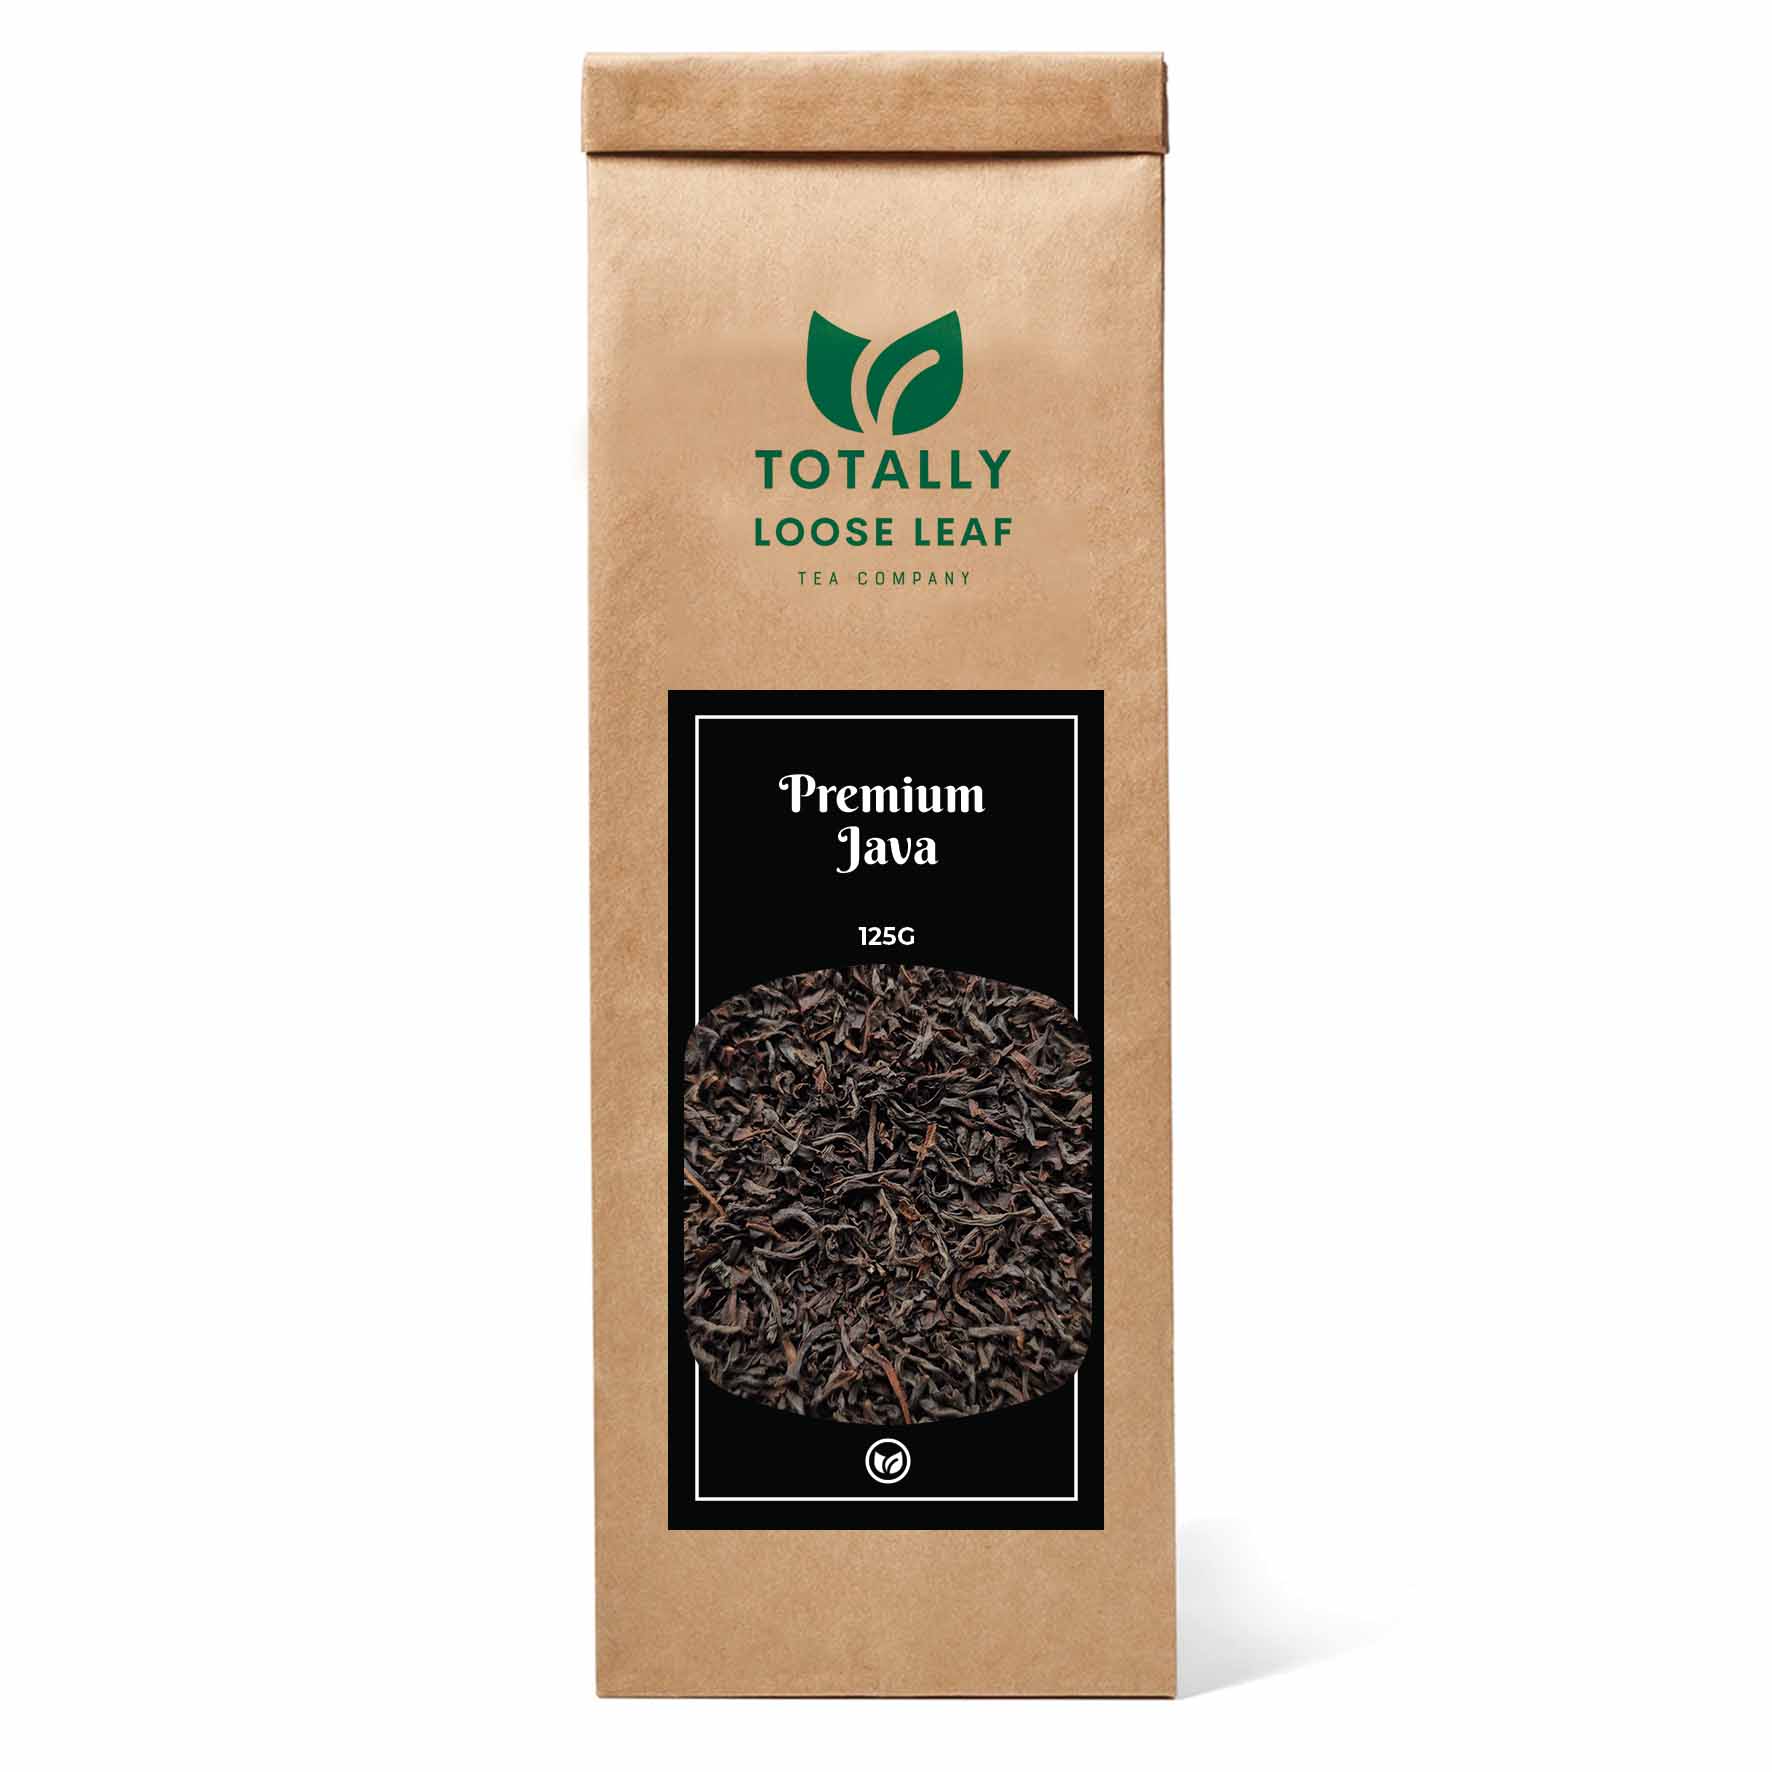 Premium Java Black Estate Loose Leaf Tea - one pouch